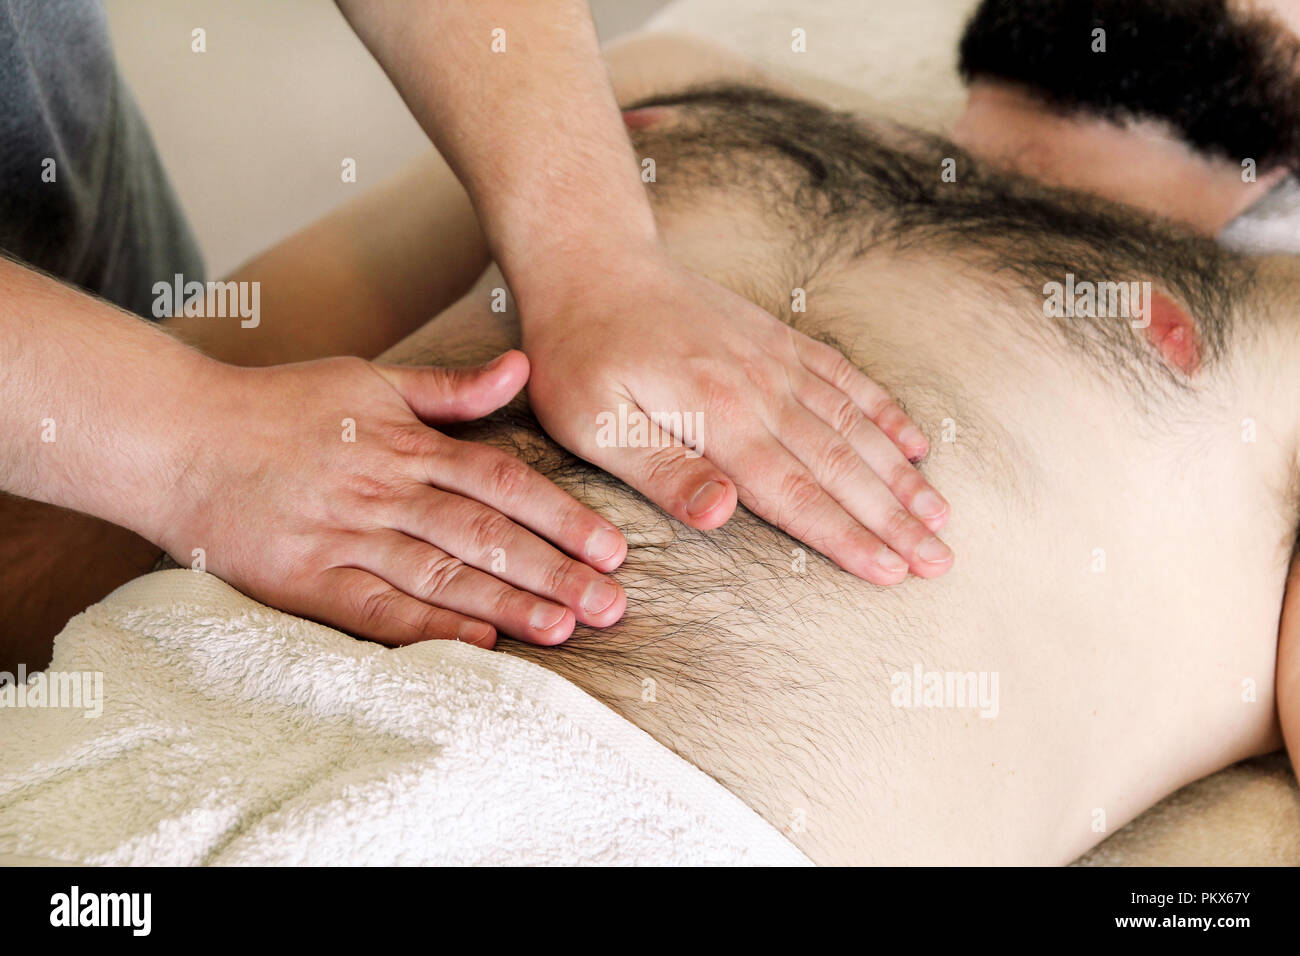 Hairy Man Massage